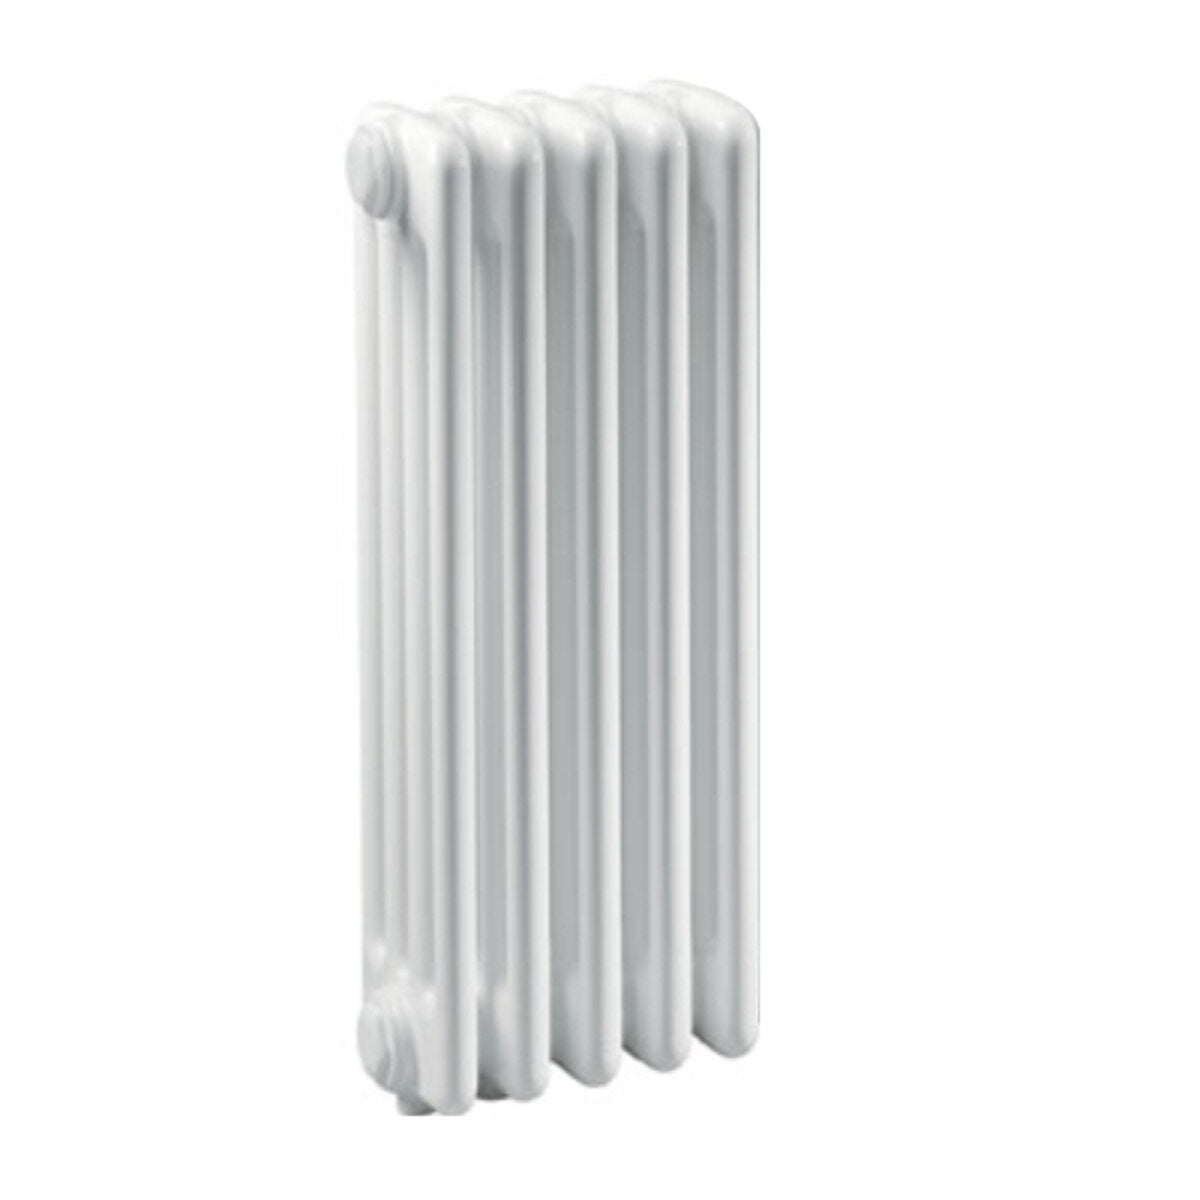 Ercos Comby steel column radiator 5 elements 3 columns center distance 1435 mm